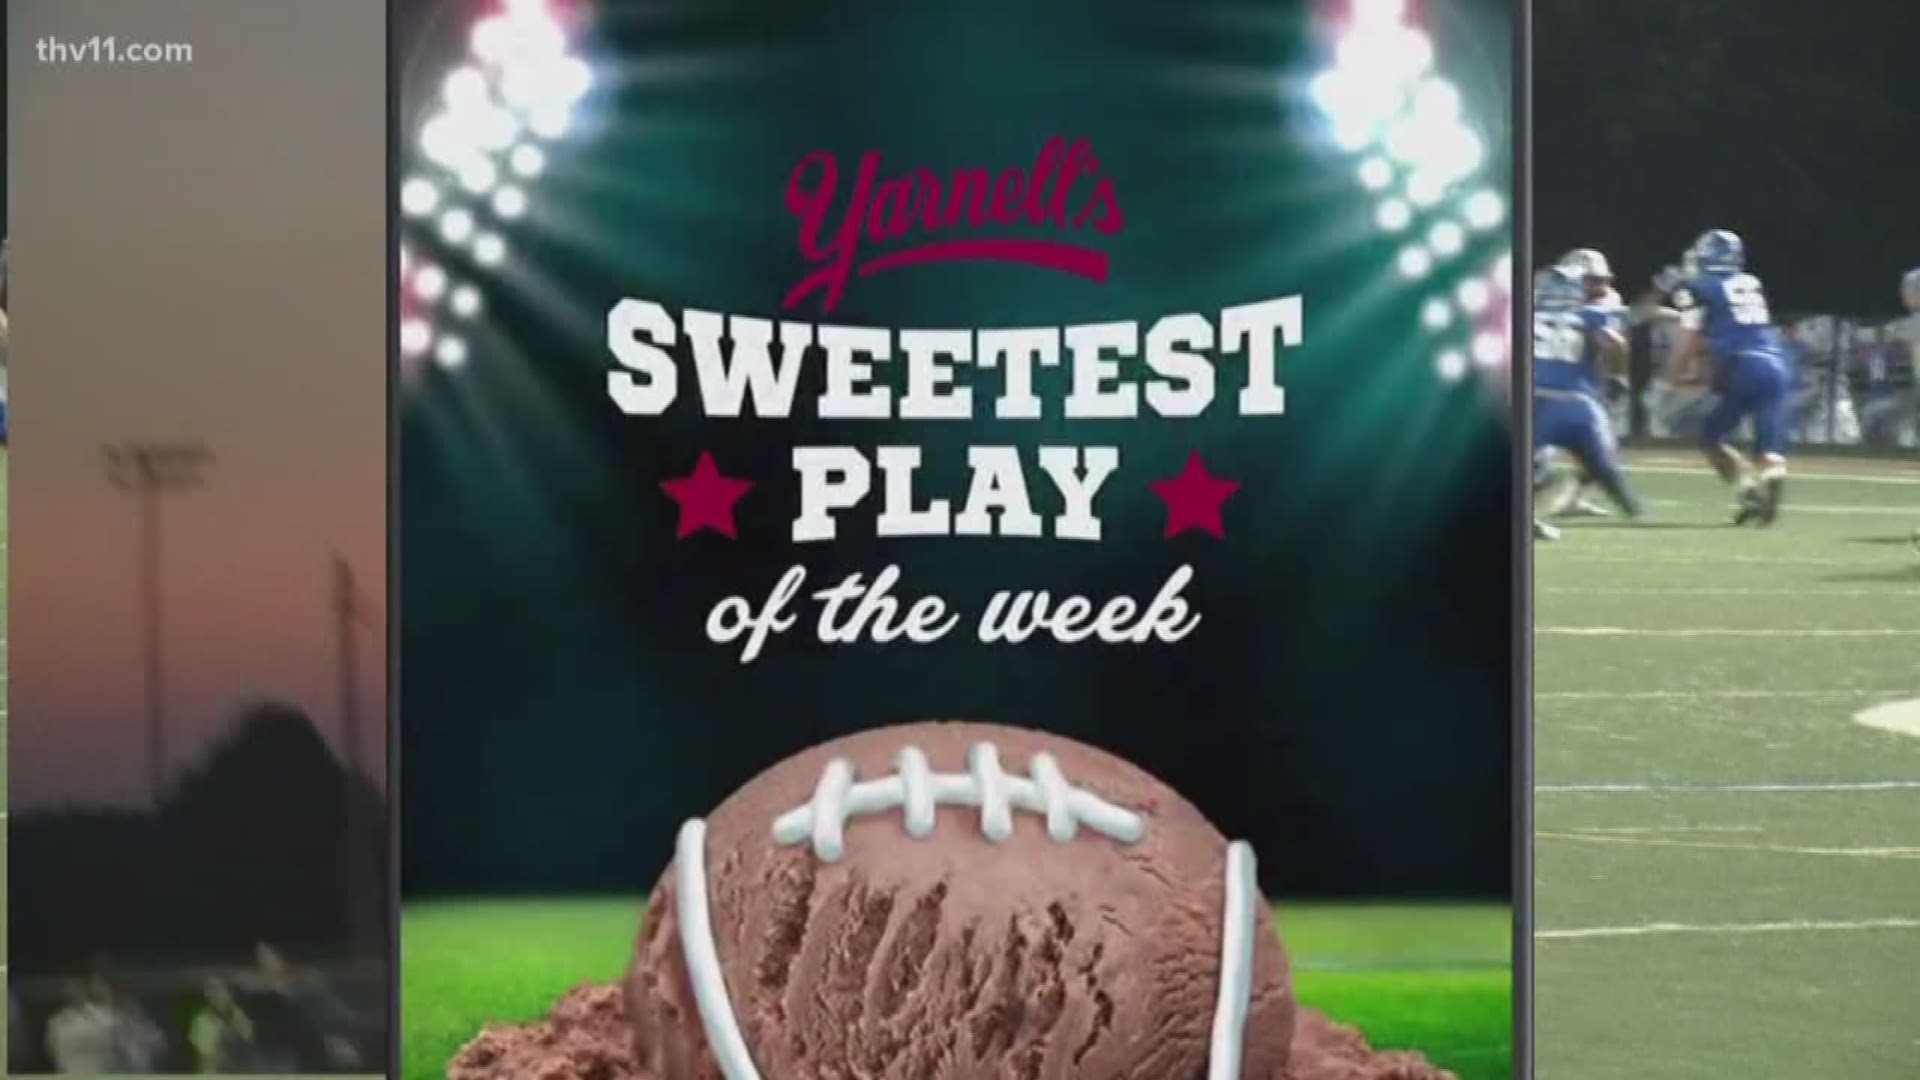 Yarnell's Sweetest Play of the Week: Week 4 Nominees